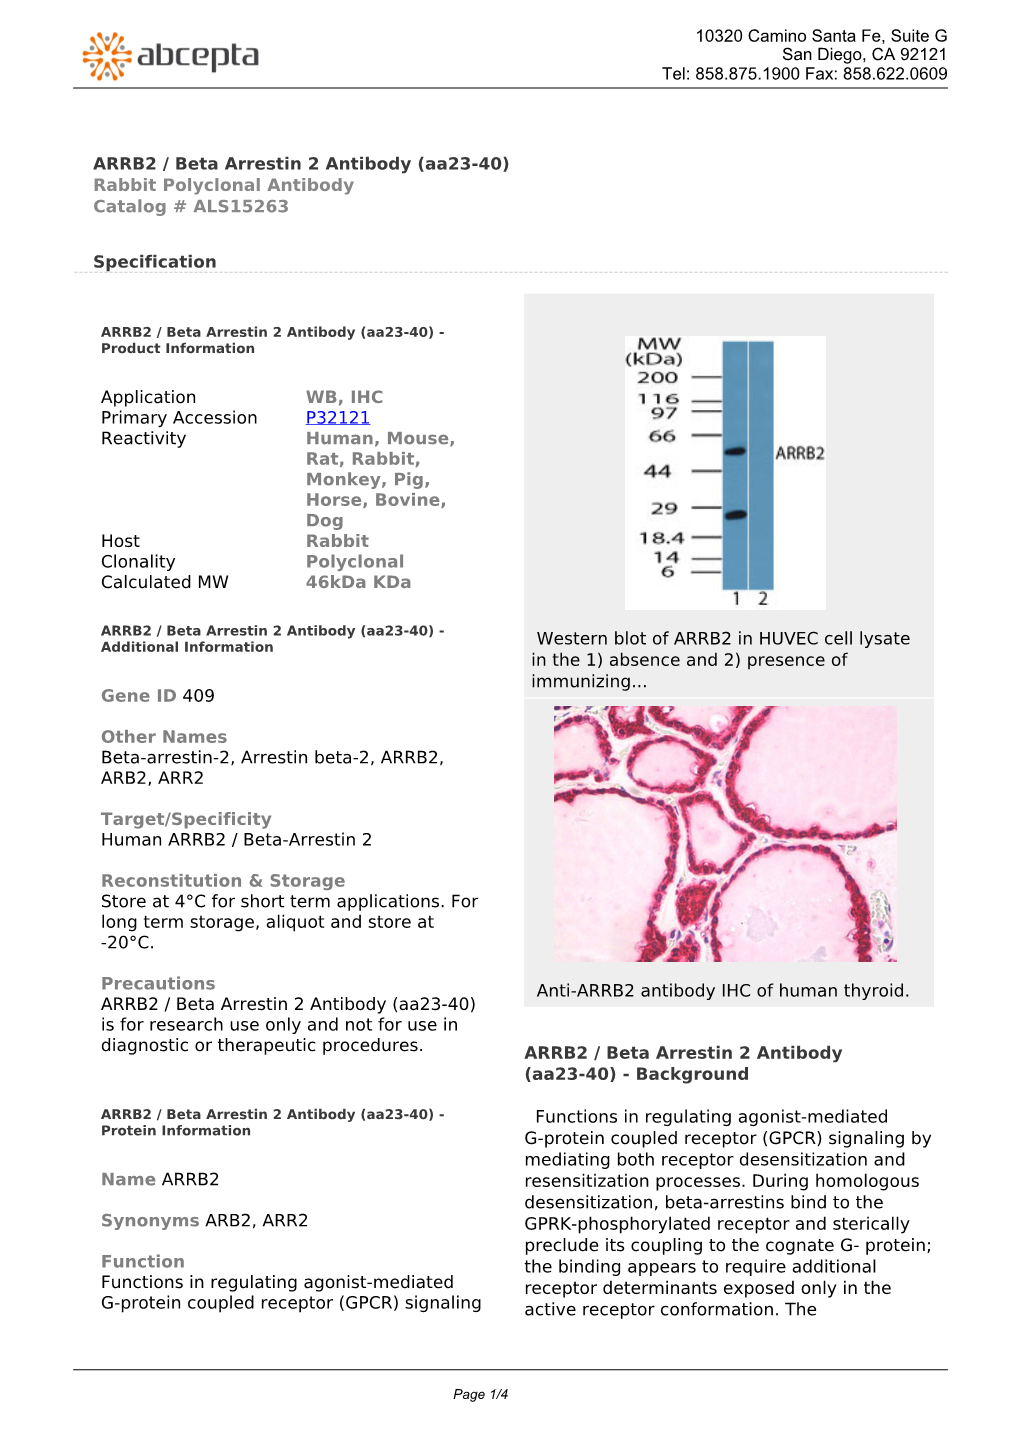 ARRB2 / Beta Arrestin 2 Antibody (Aa23-40) Rabbit Polyclonal Antibody Catalog # ALS15263